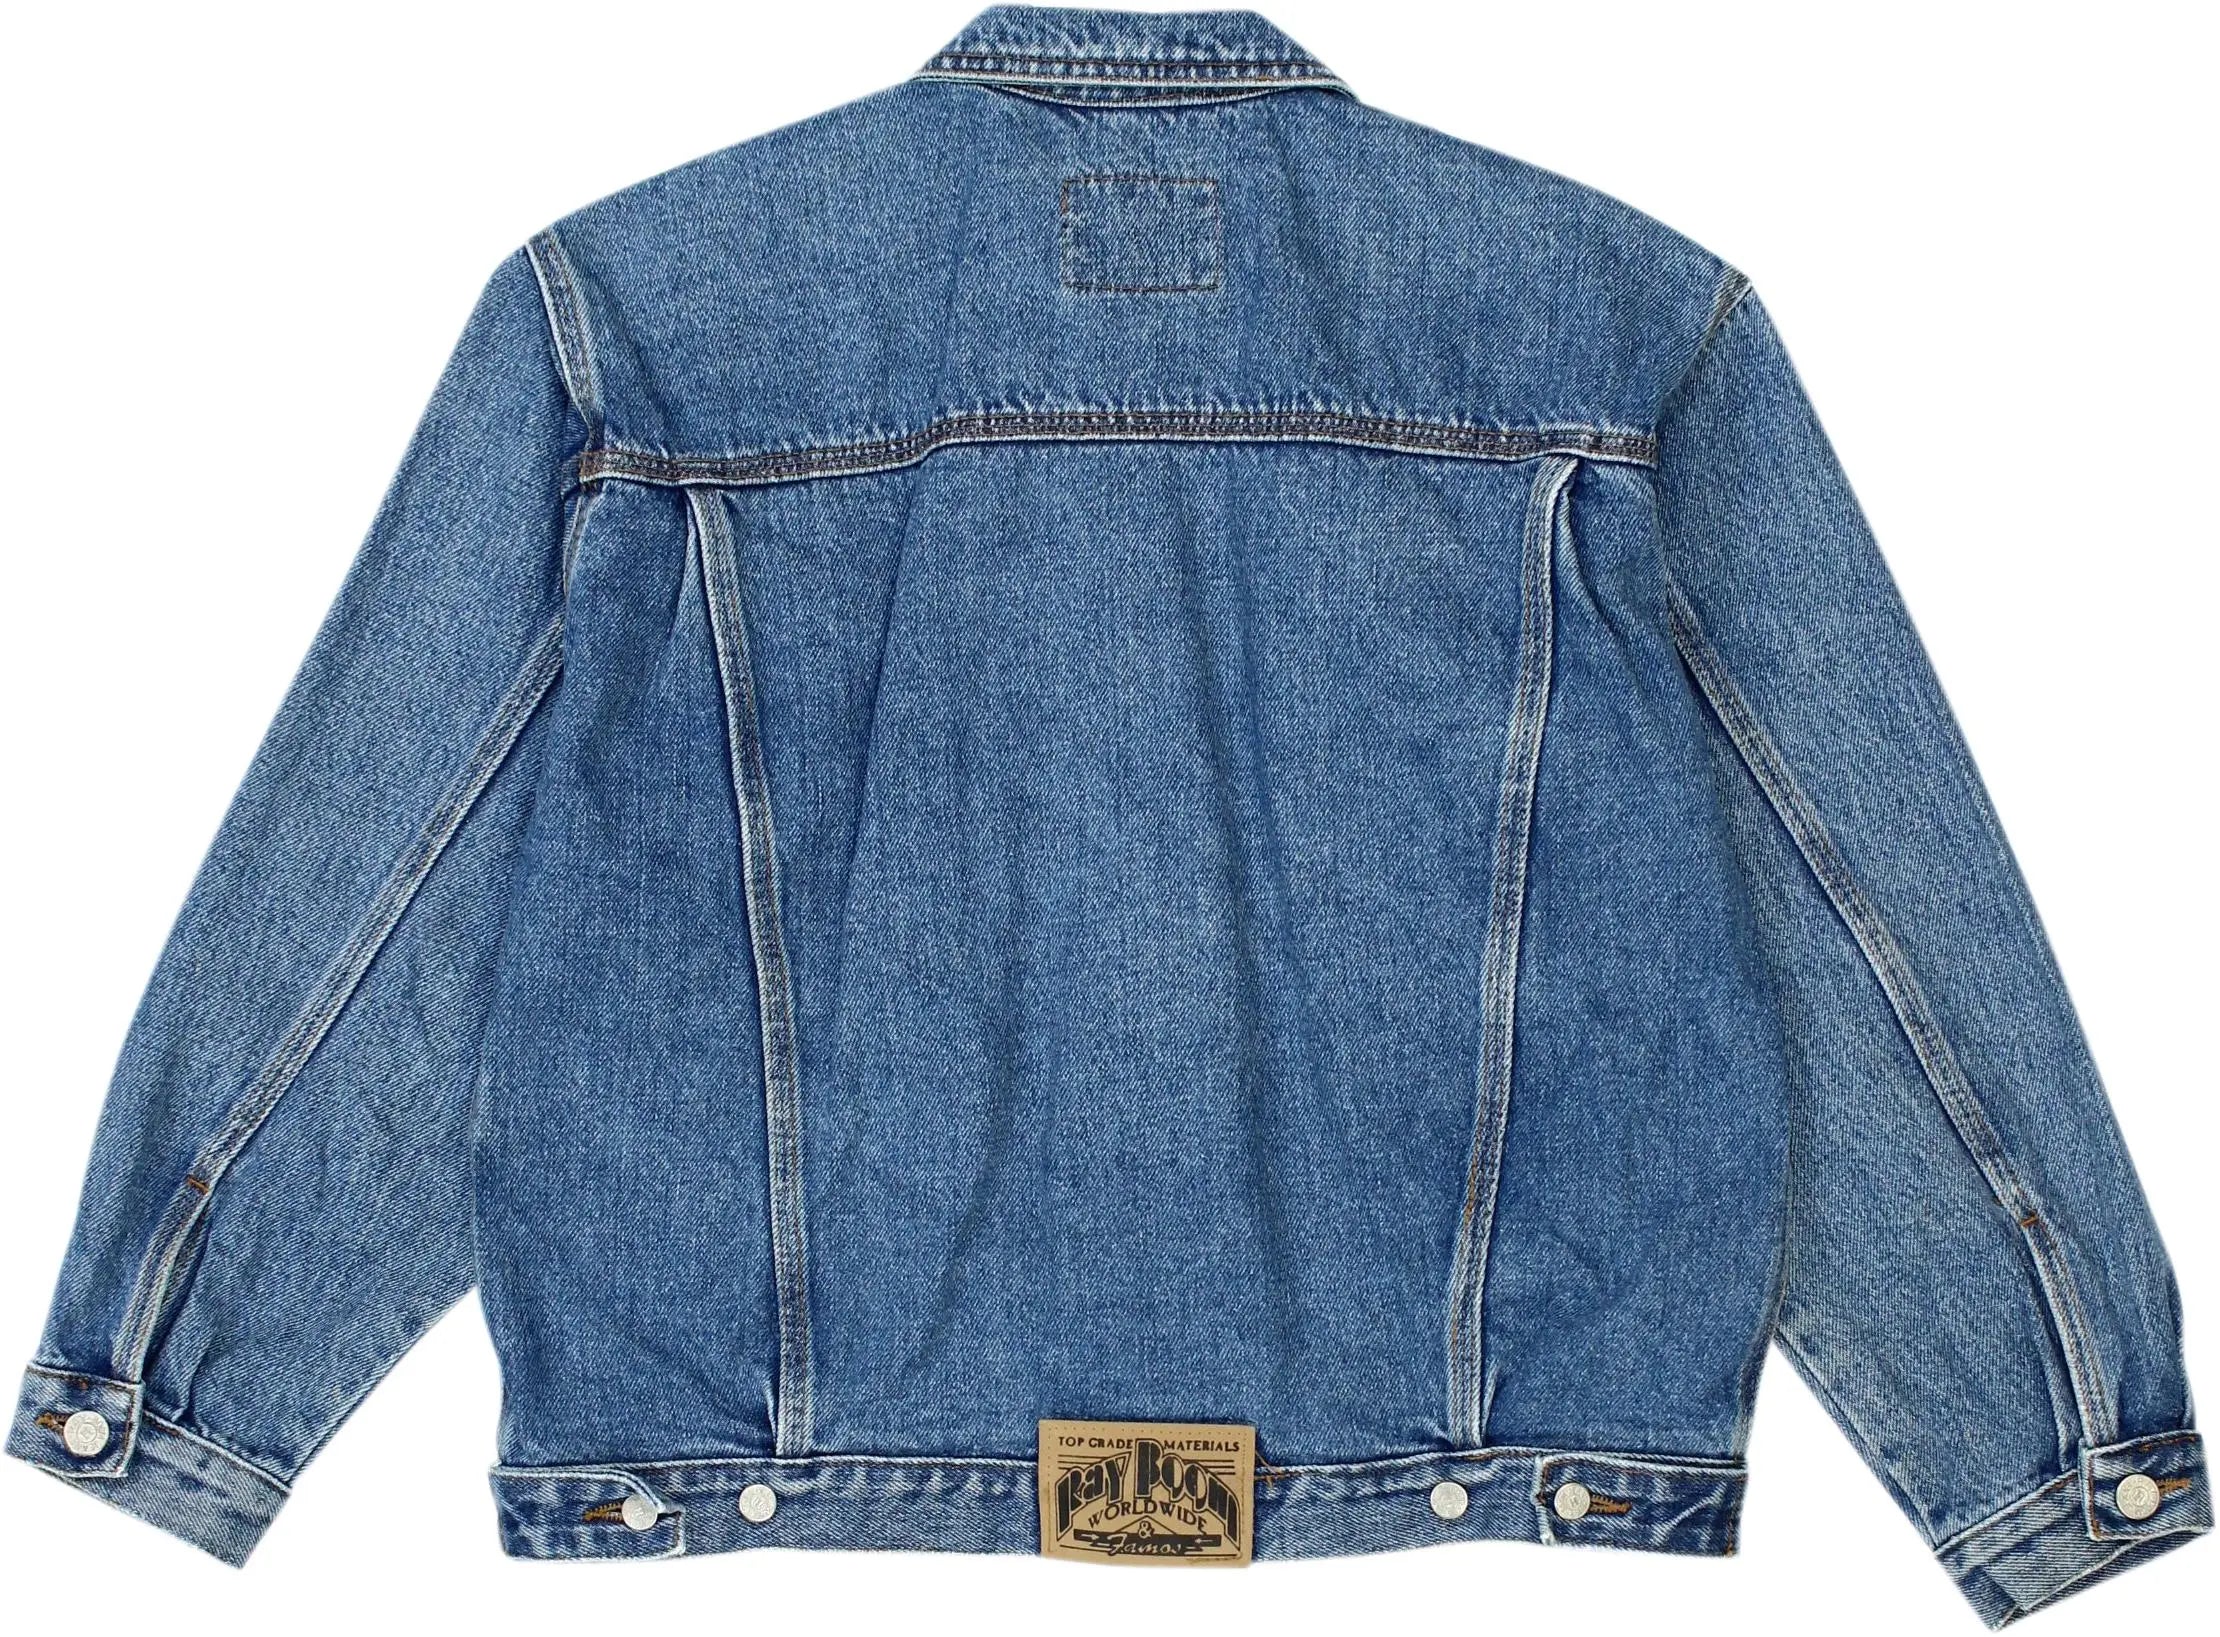 Rayboom - Blue Denim Jacket- ThriftTale.com - Vintage and second handclothing